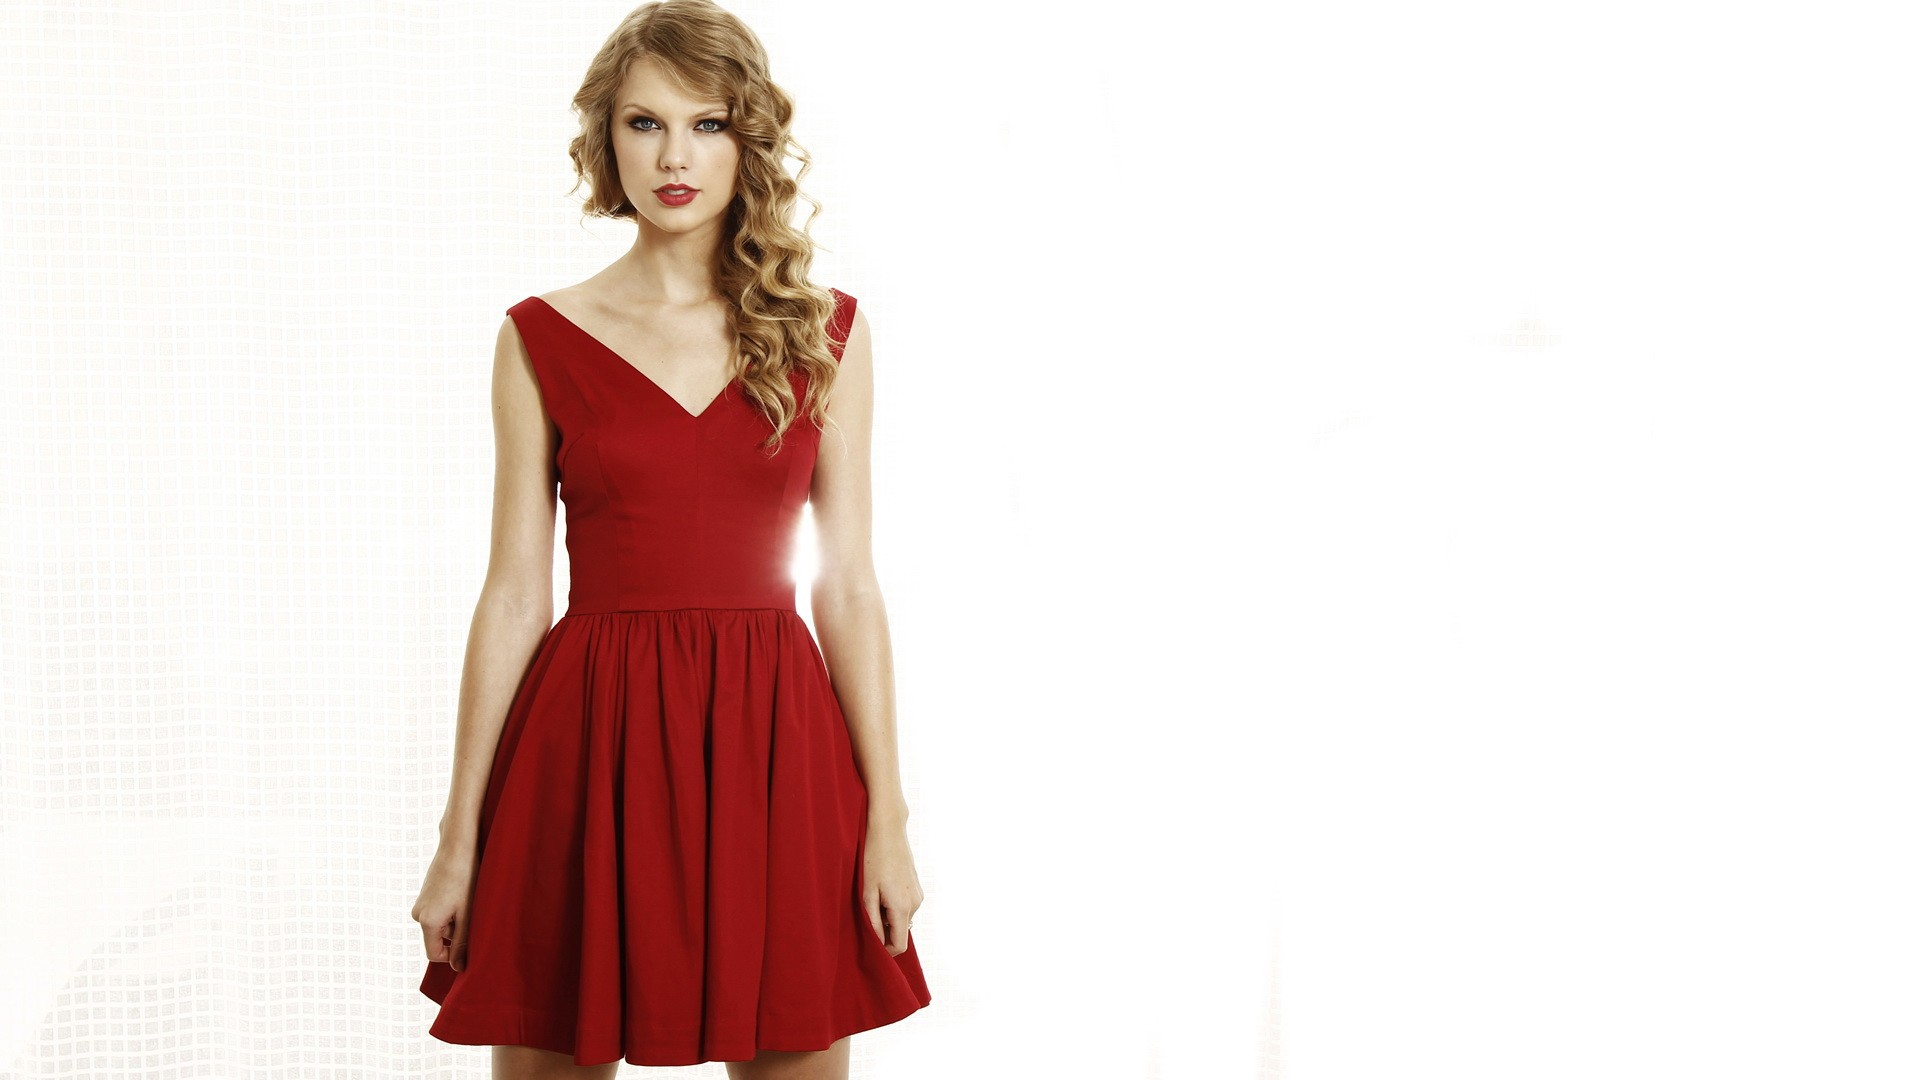 Blonde Singer White Background Red Dress